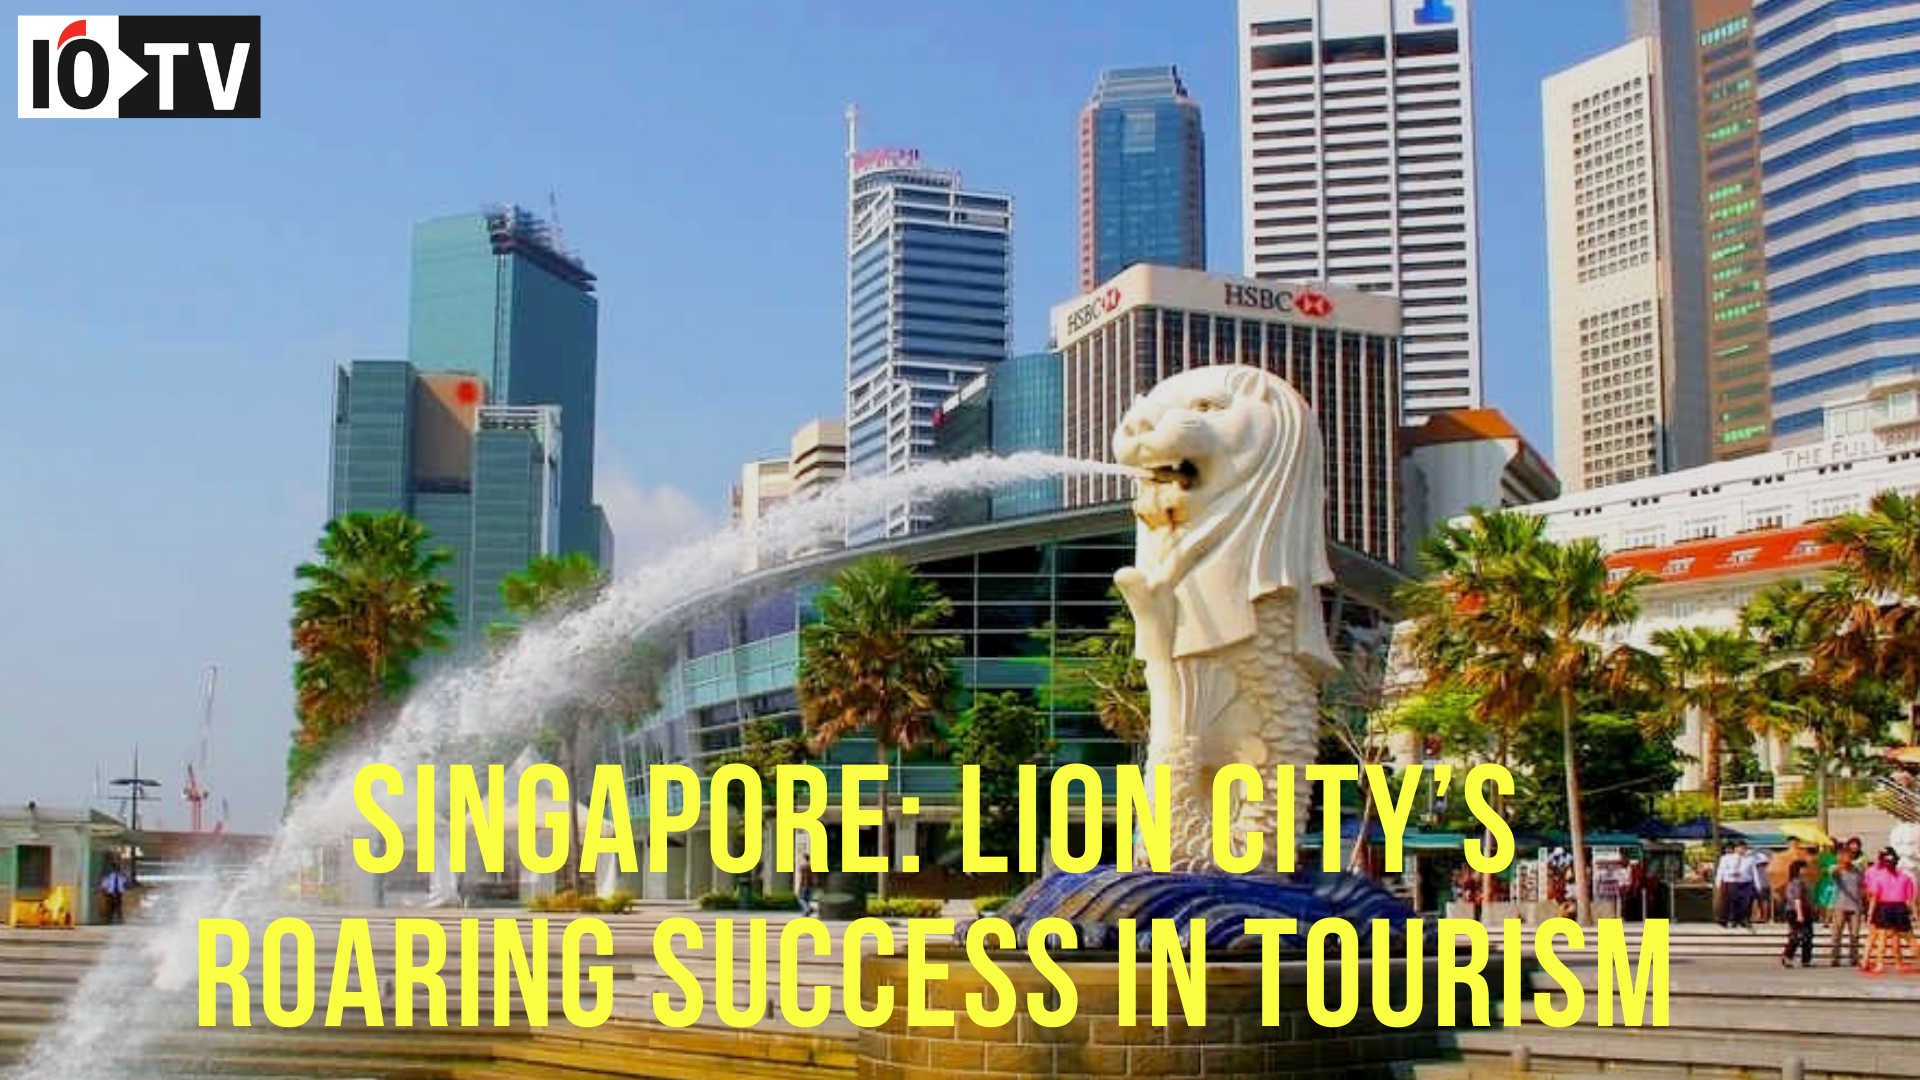 Singapore: Lion City’s roaring success in tourism